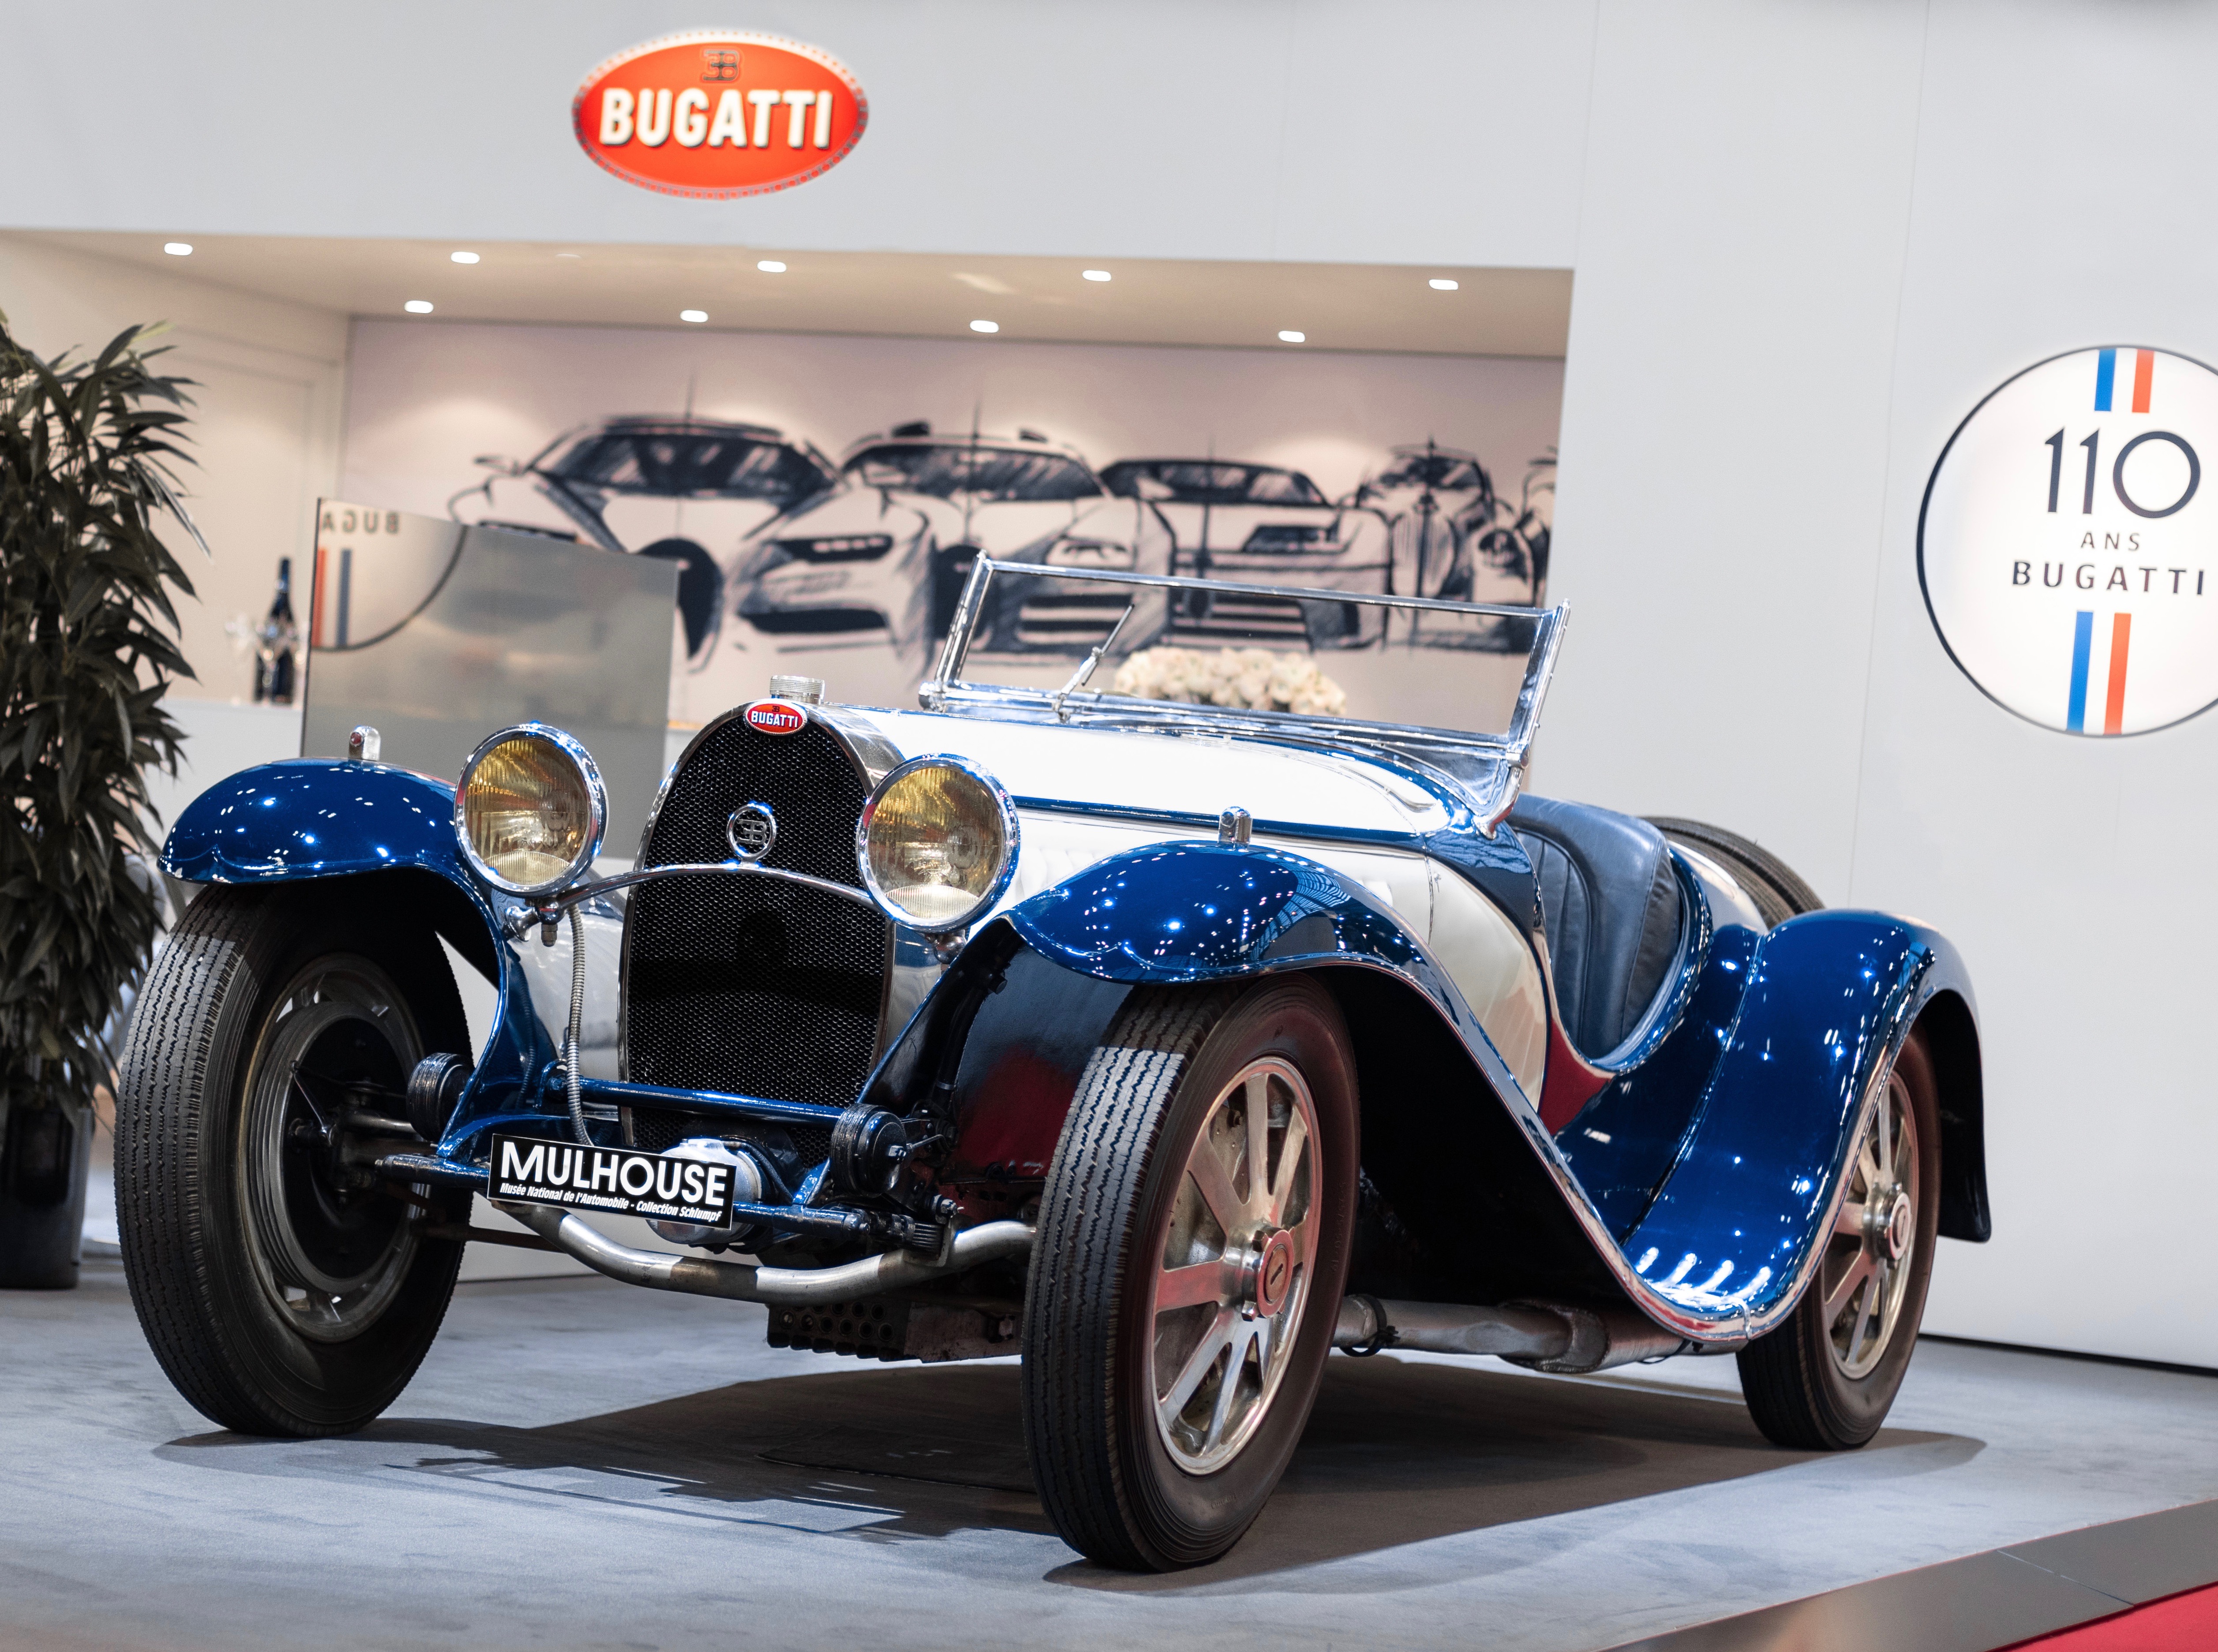 Bugatti, Bugatti staging birthday bash at Retromobile, ClassicCars.com Journal